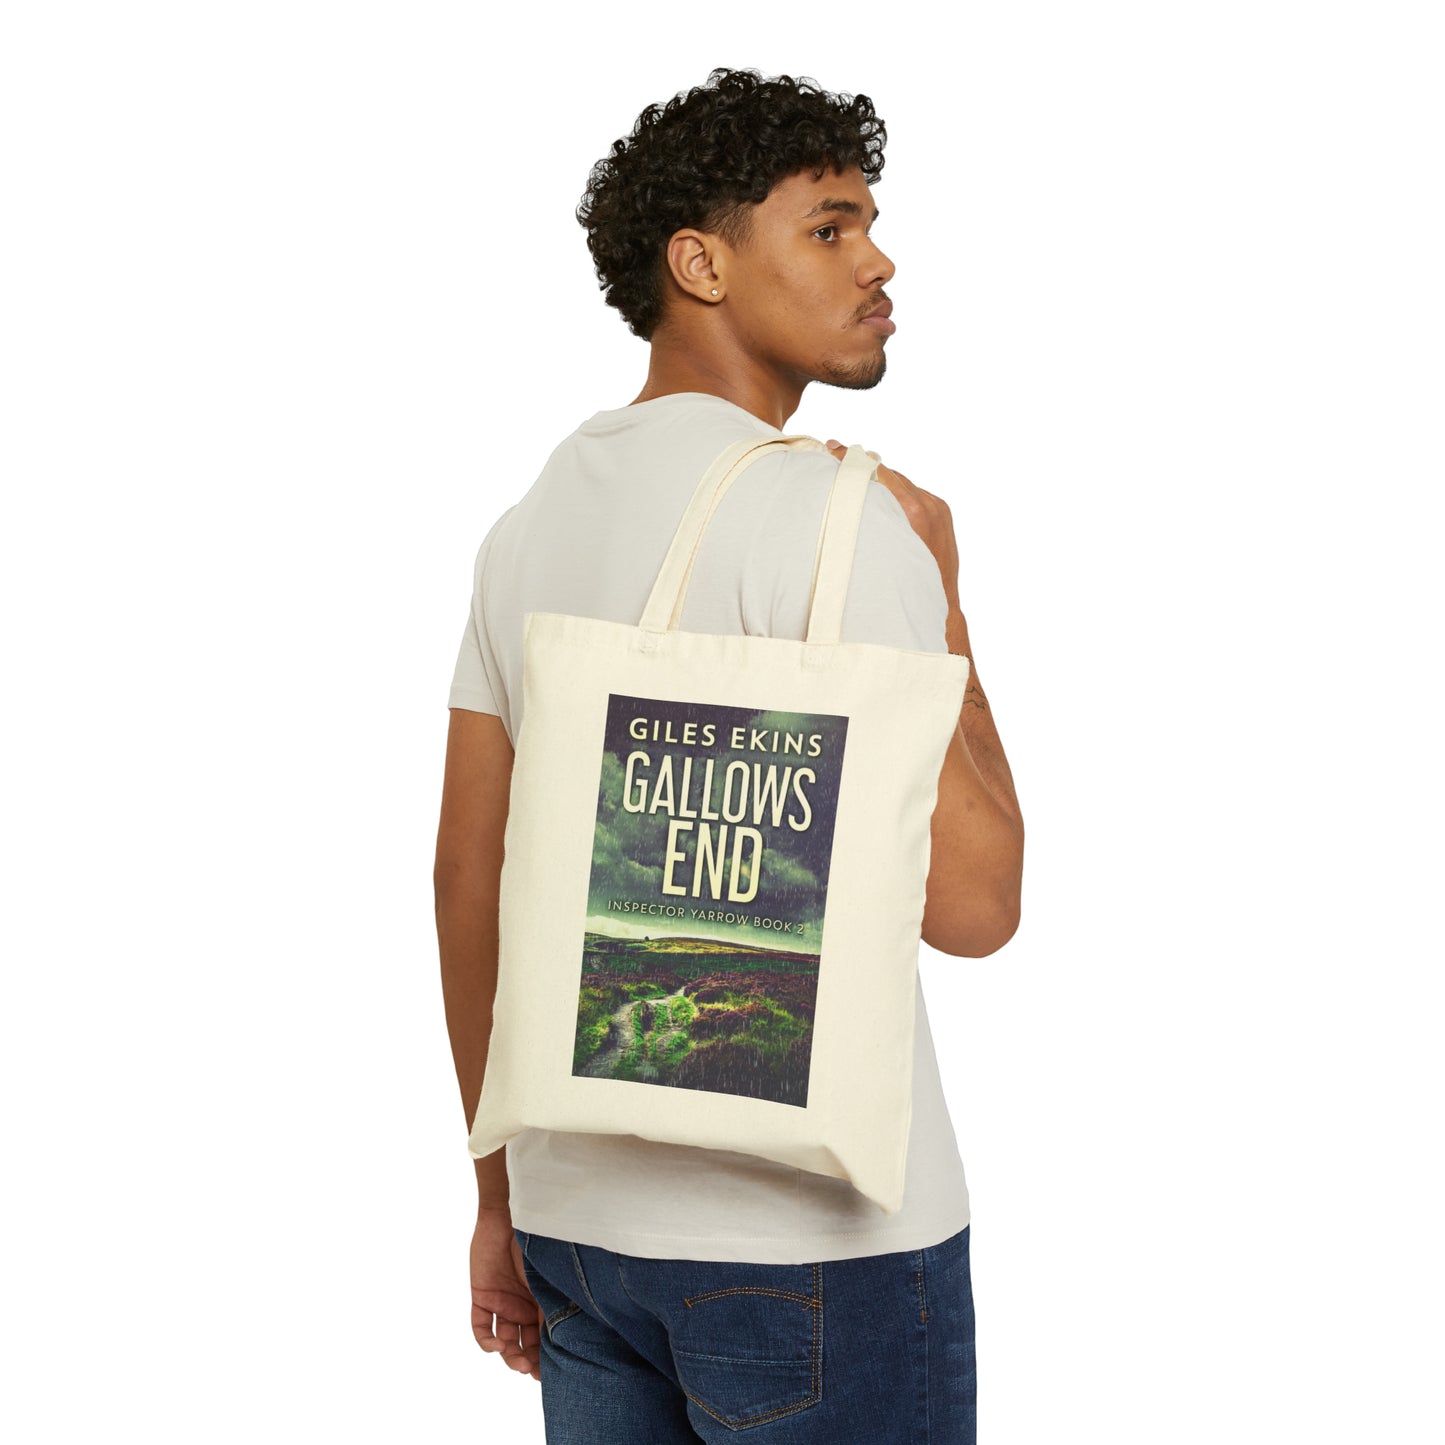 Gallows End - Cotton Canvas Tote Bag